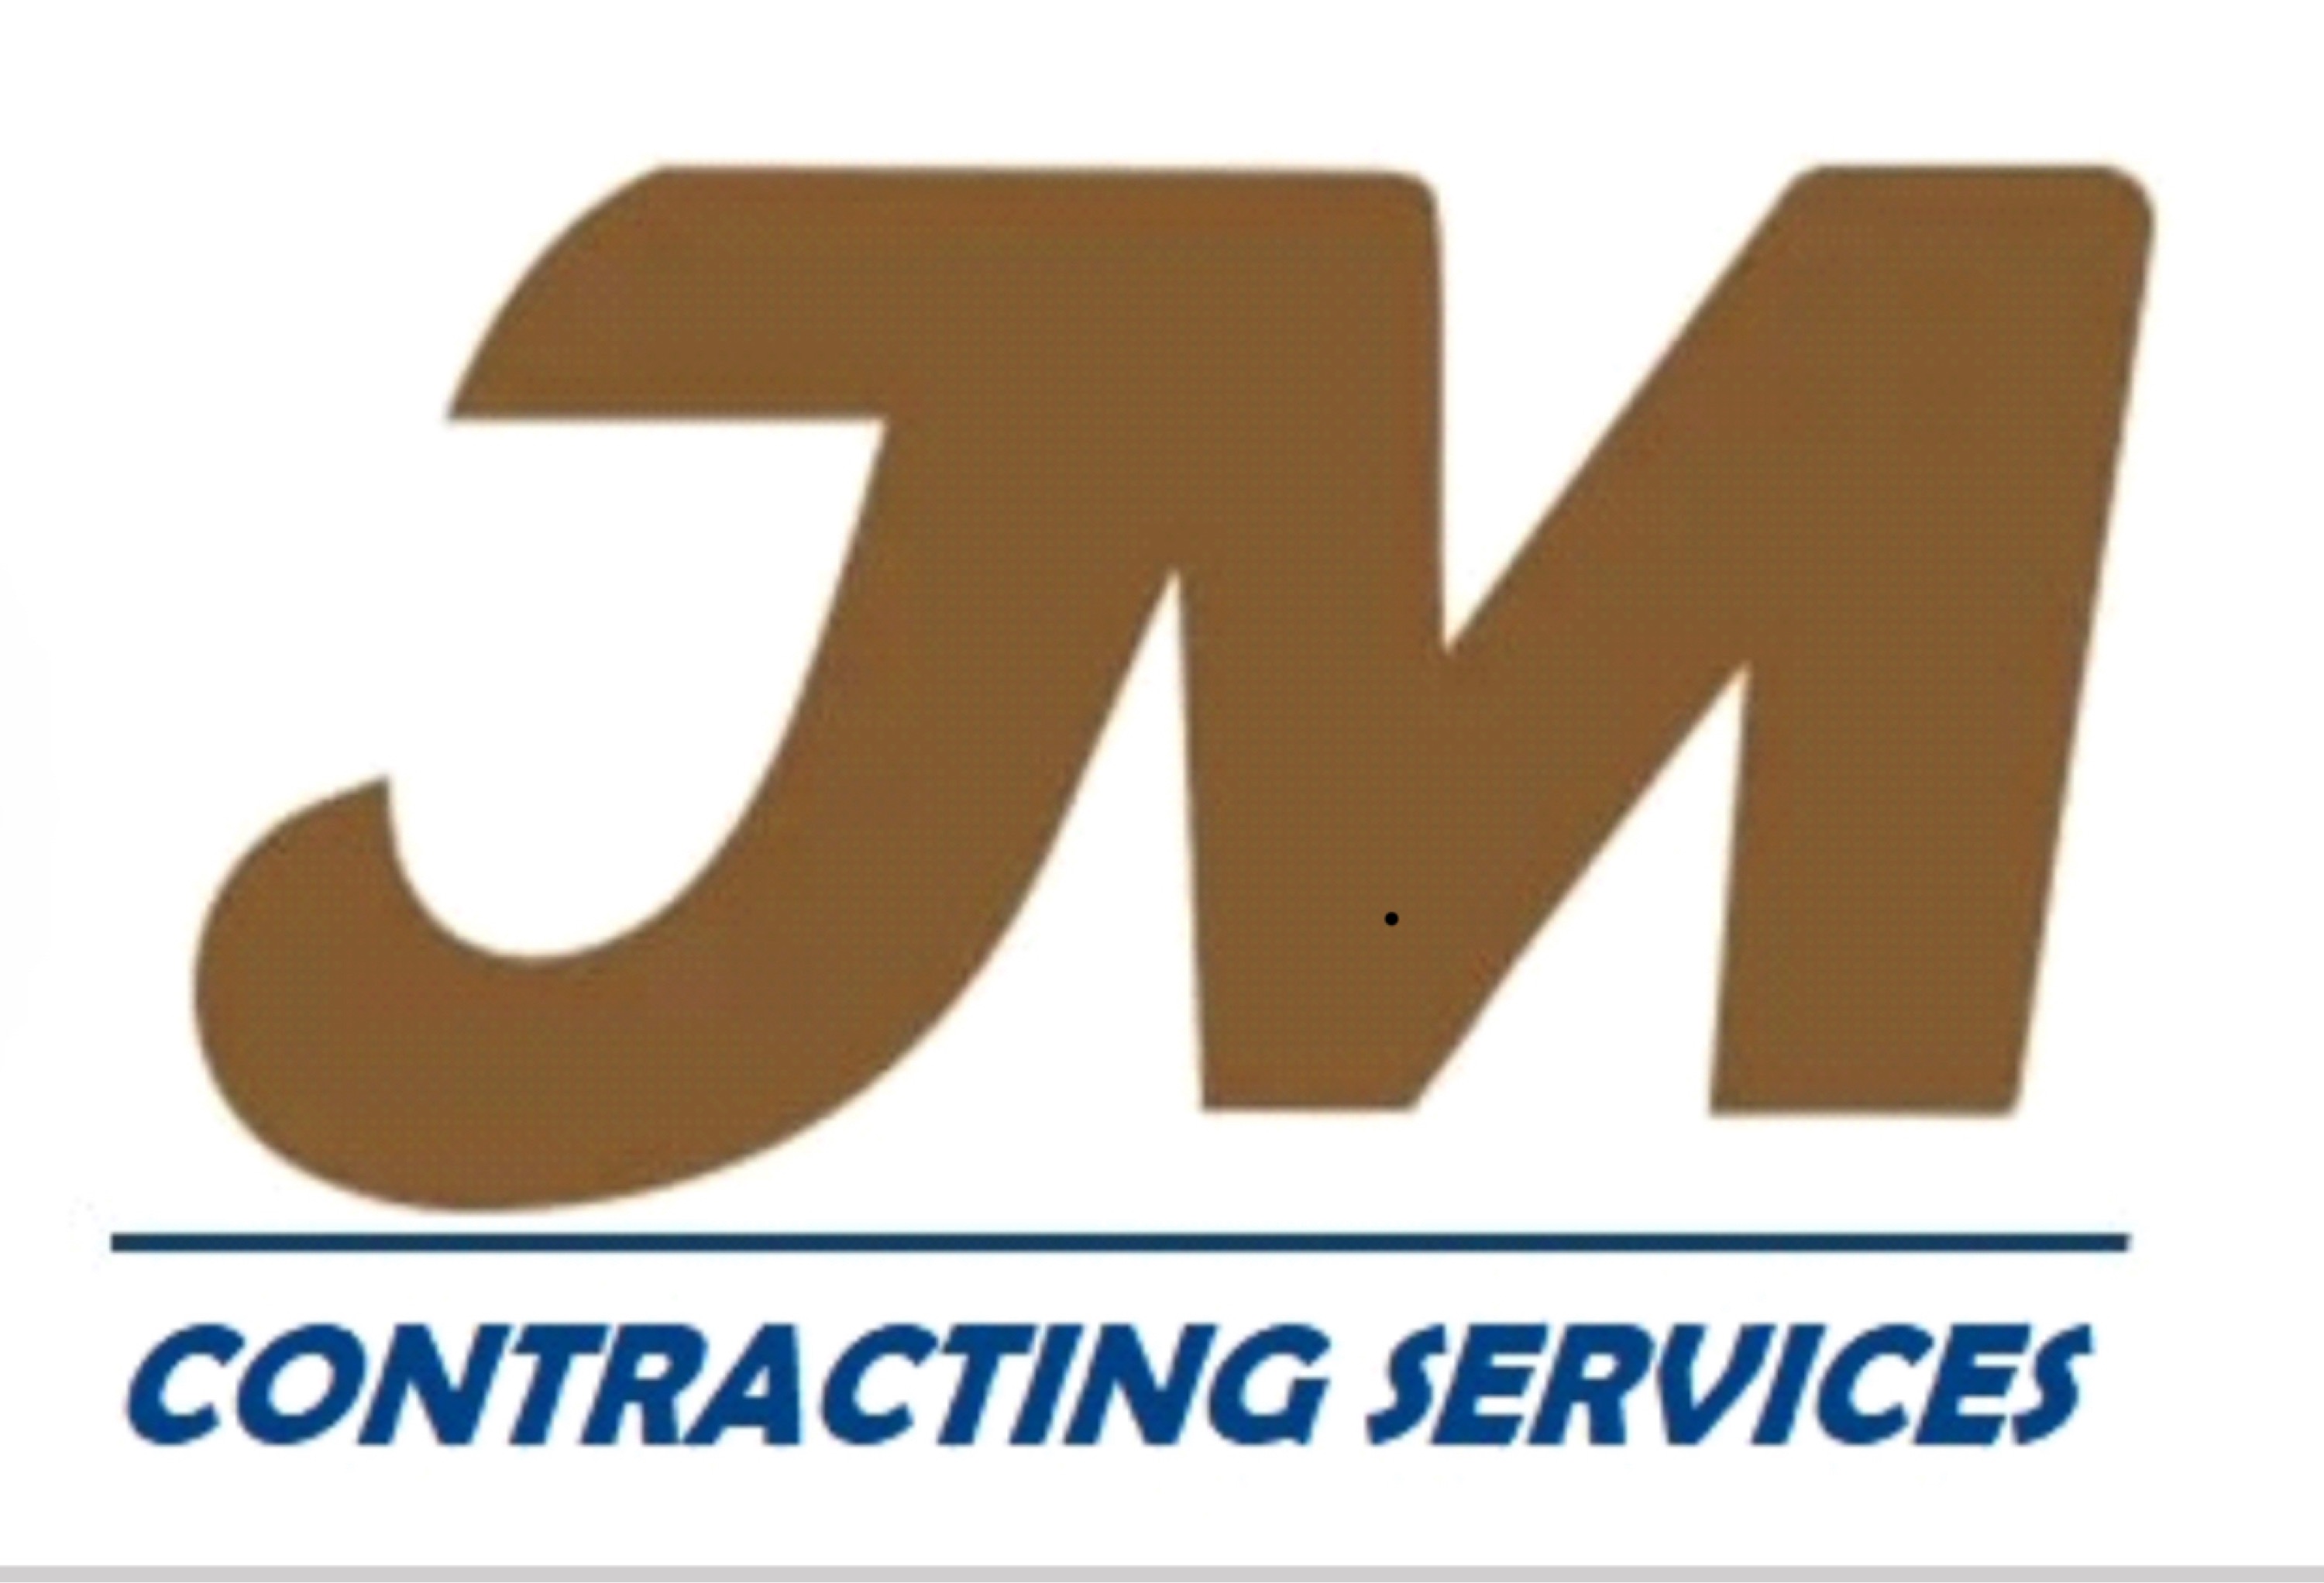 JM Contracting Services Logo